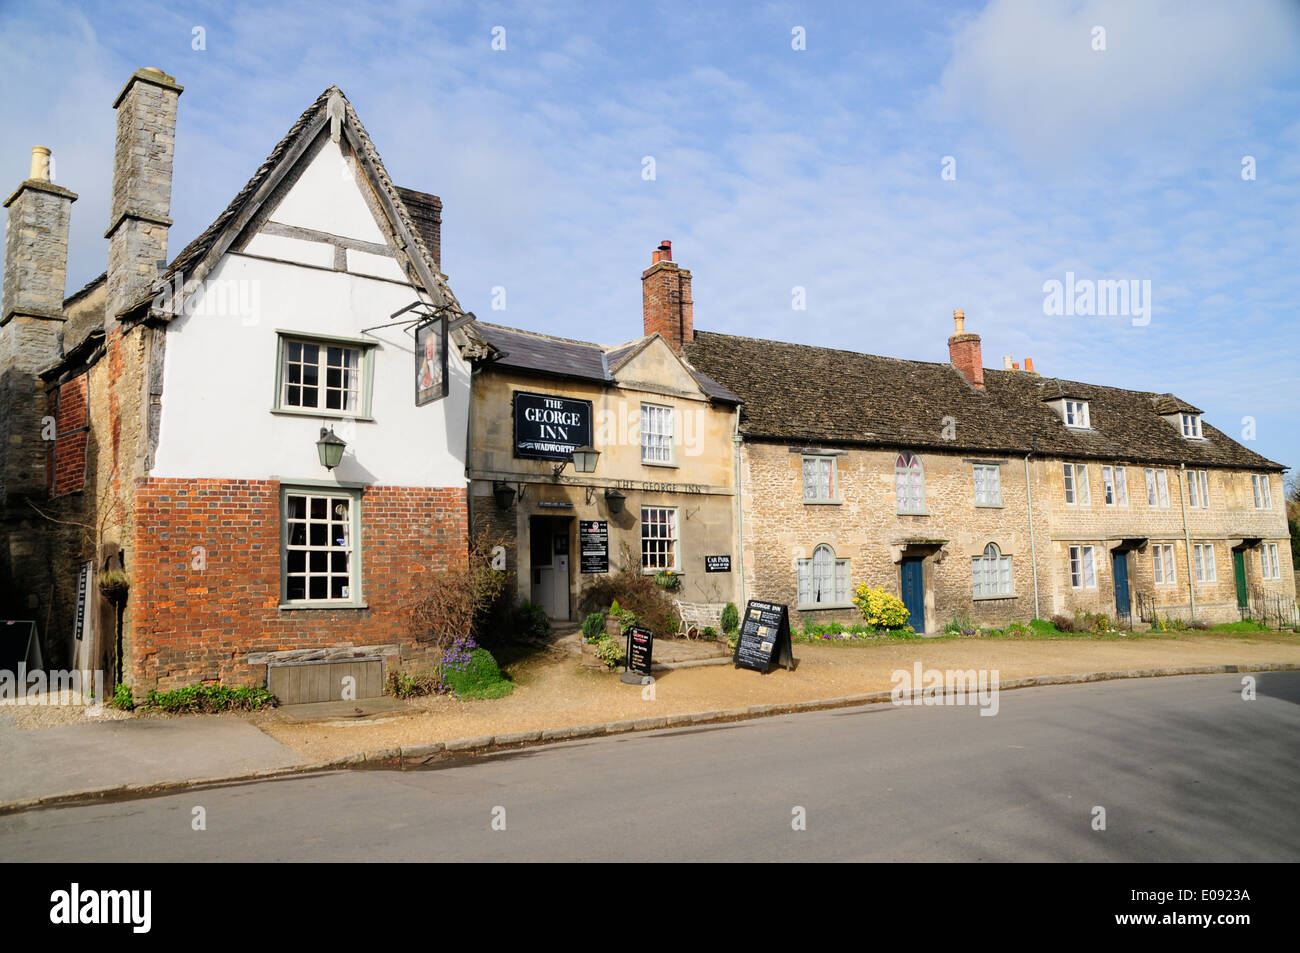 La George Inn Pub, Lacock, Wiltshire, Inglaterra Foto de stock